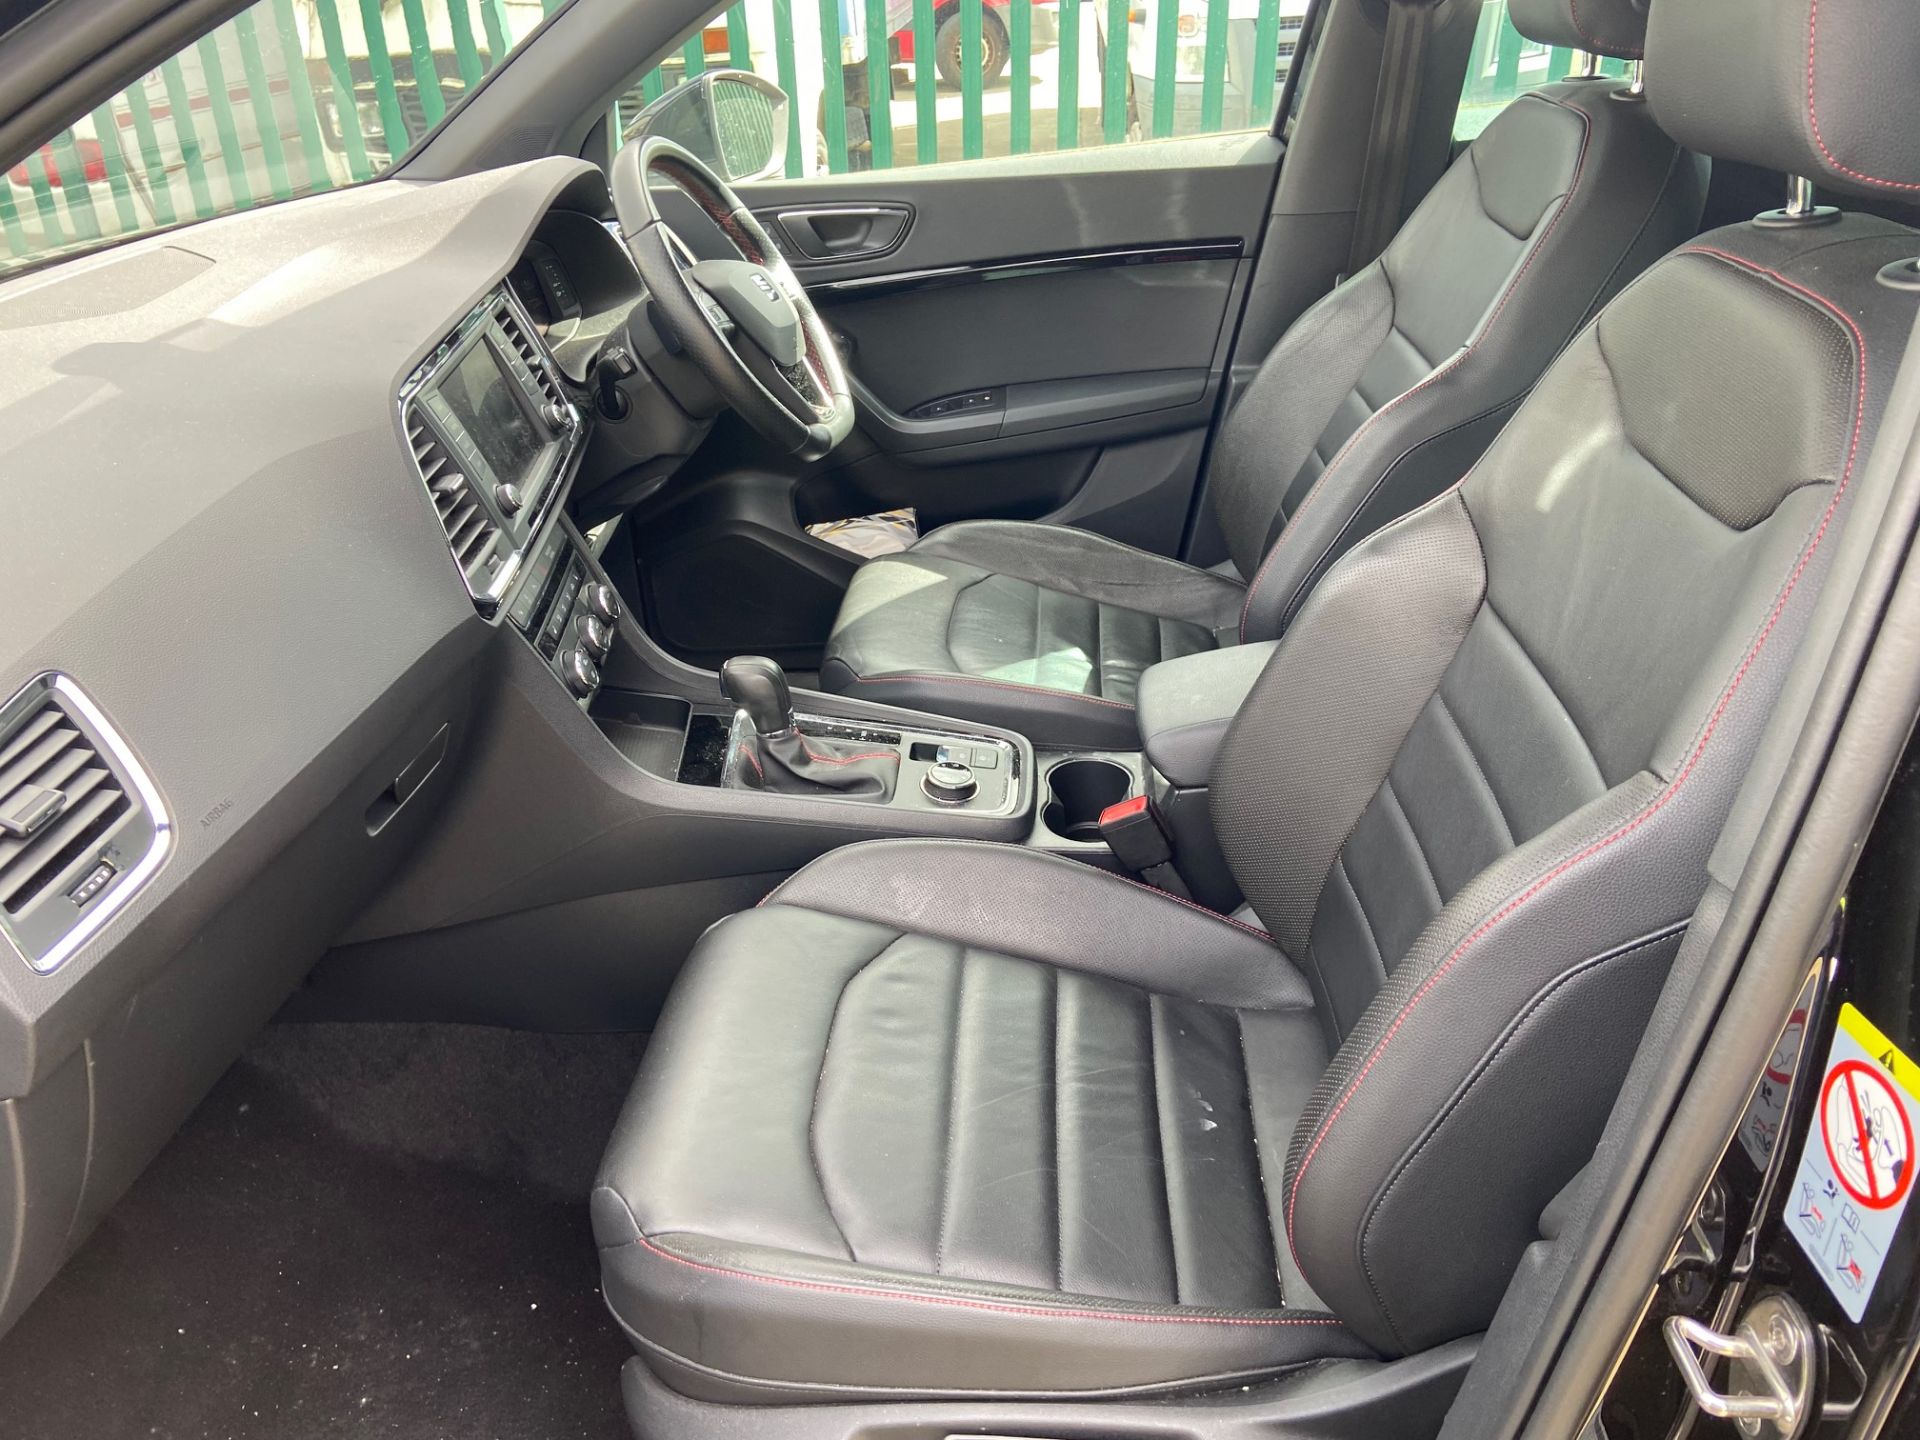 SEAT ATECA (YOM 2019) FR SPORT TSi 4 DRIVE 2.0 five door hatchback - petrol - black. - Image 12 of 13